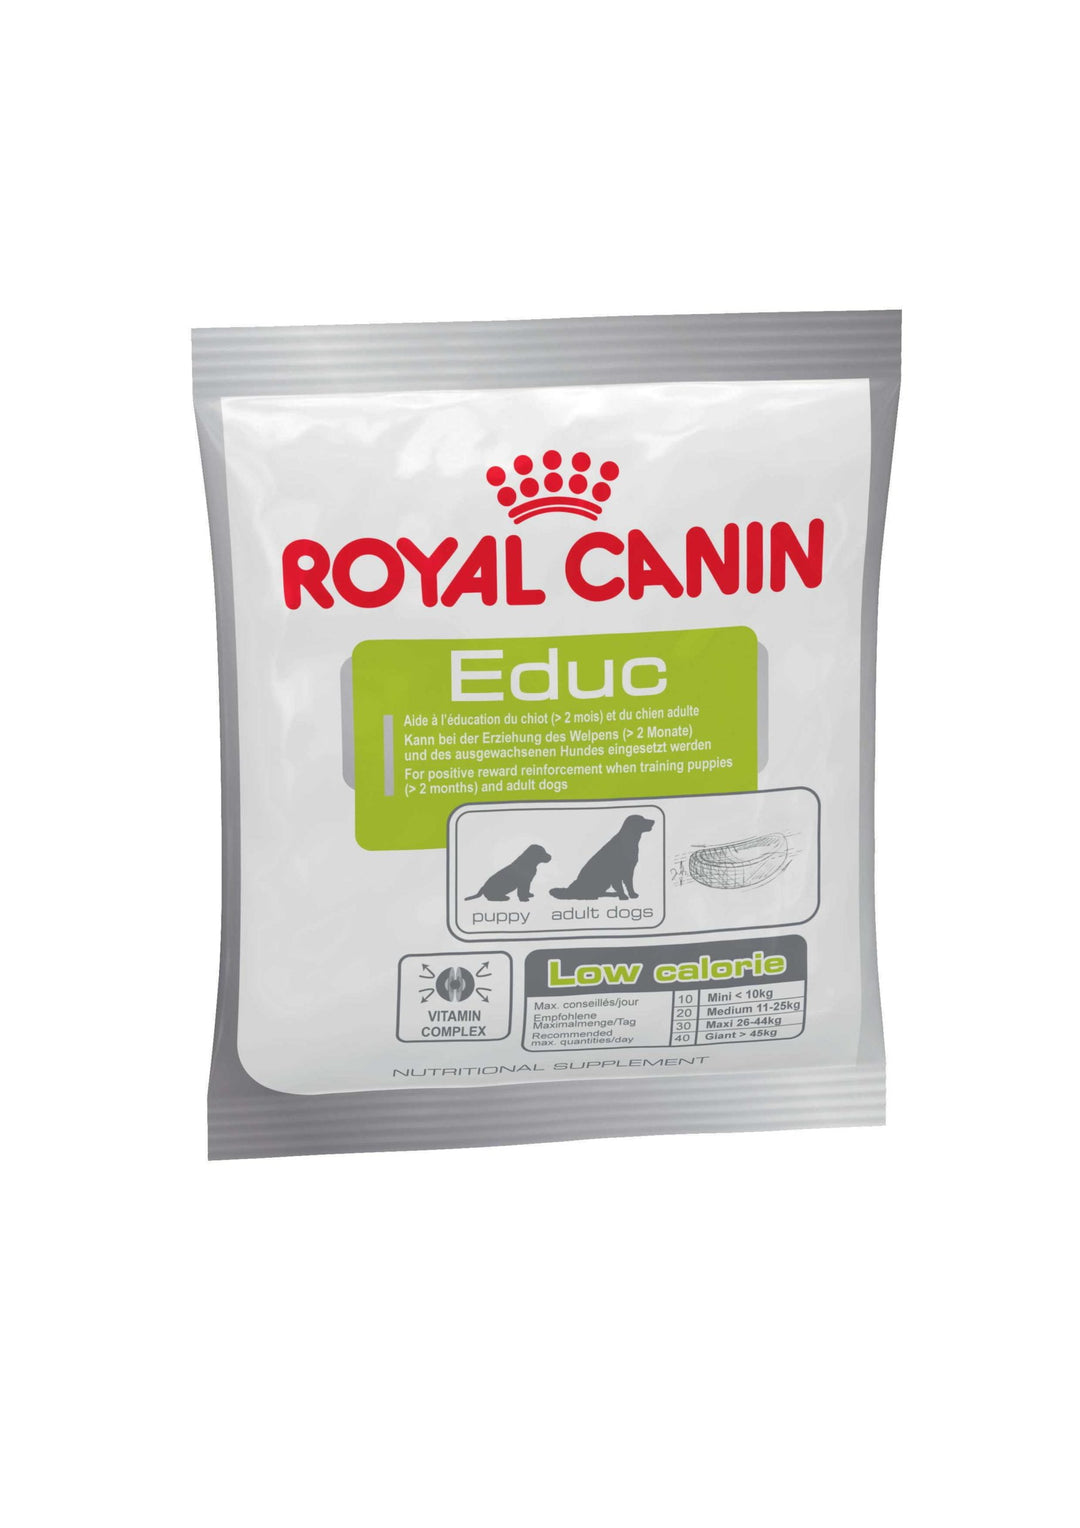 Royal Canin Educ Dog Treats 50g - PetWorld